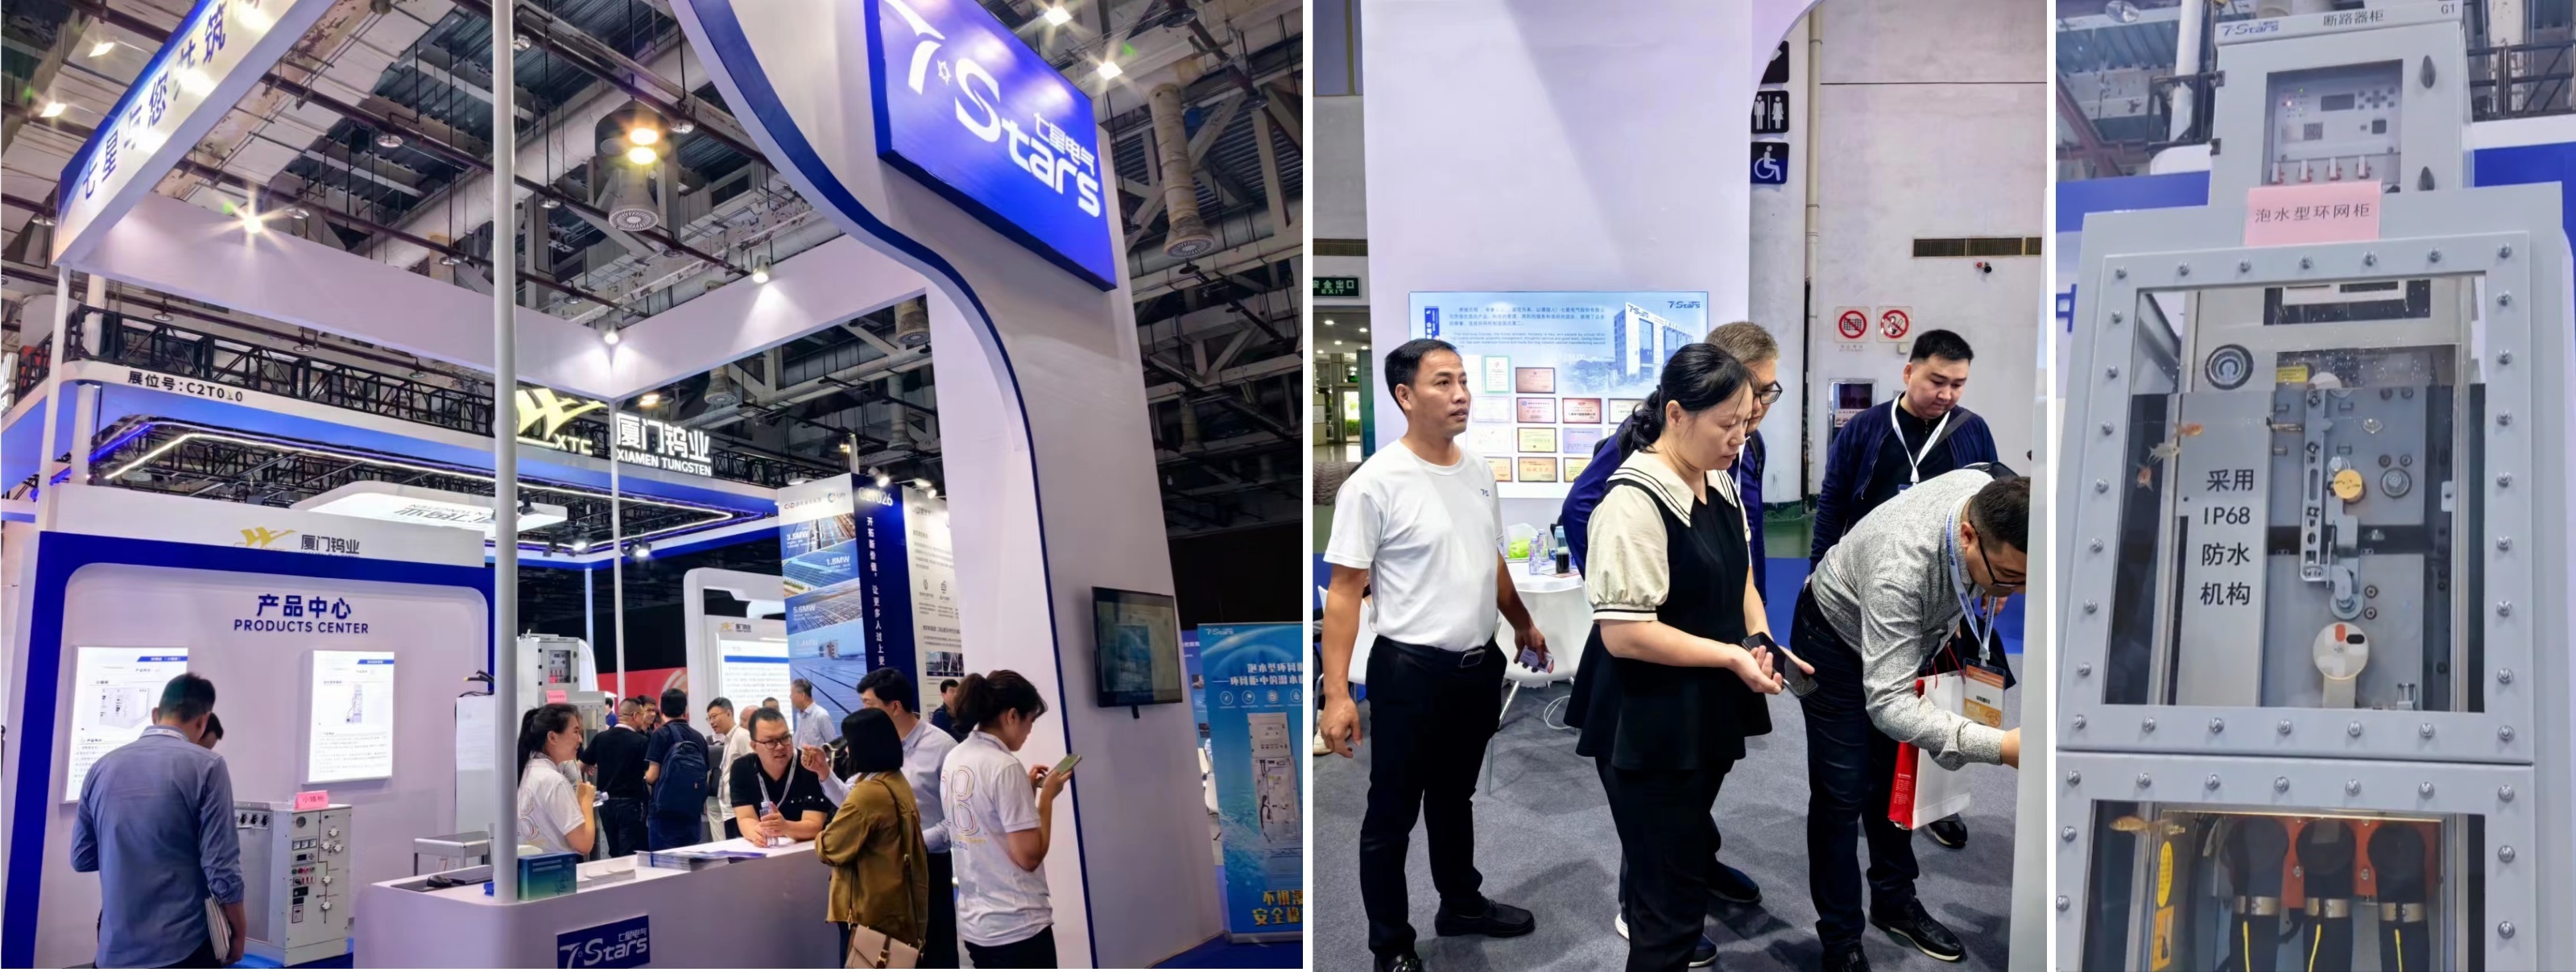 Quanzhou Seven Stars Electric nahm im Oktober an der 24. Konferenz der Asia-Pacific Electrical Association in Xiamen teil